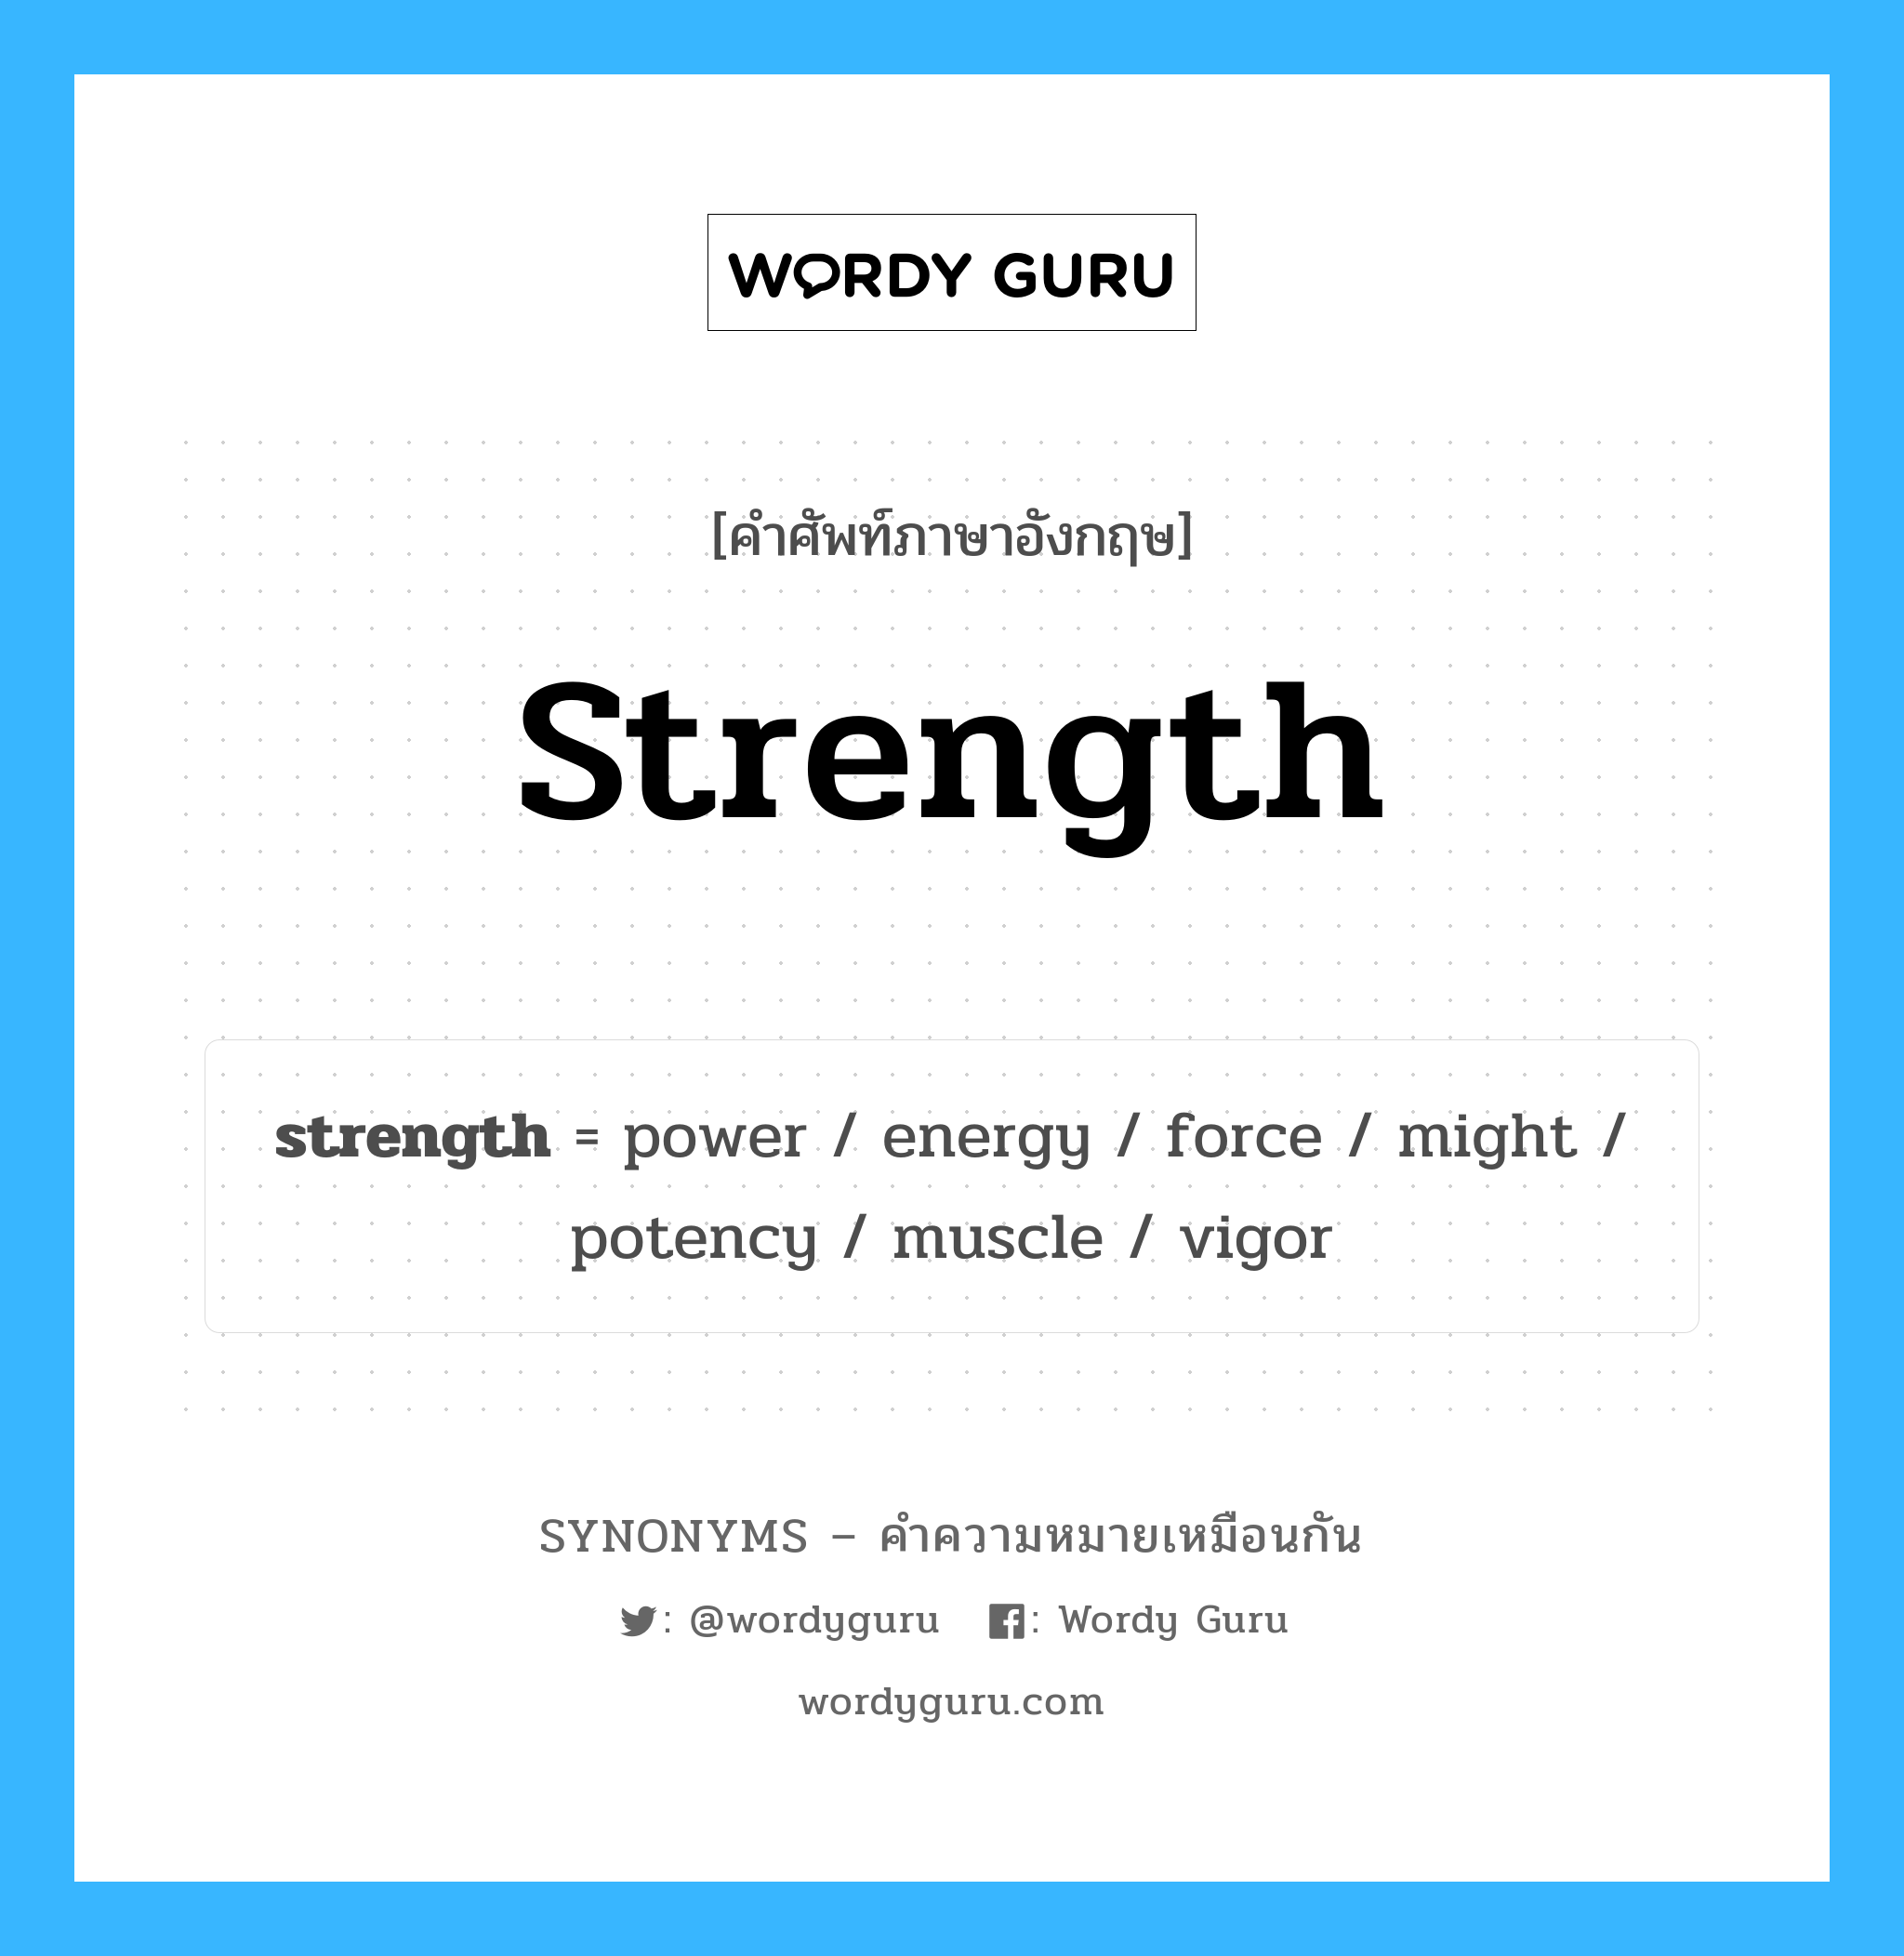 potency เป็นหนึ่งใน strength และมีคำอื่น ๆ อีกดังนี้, คำศัพท์ภาษาอังกฤษ potency ความหมายคล้ายกันกับ strength แปลว่า ความแข็งแรง หมวด strength